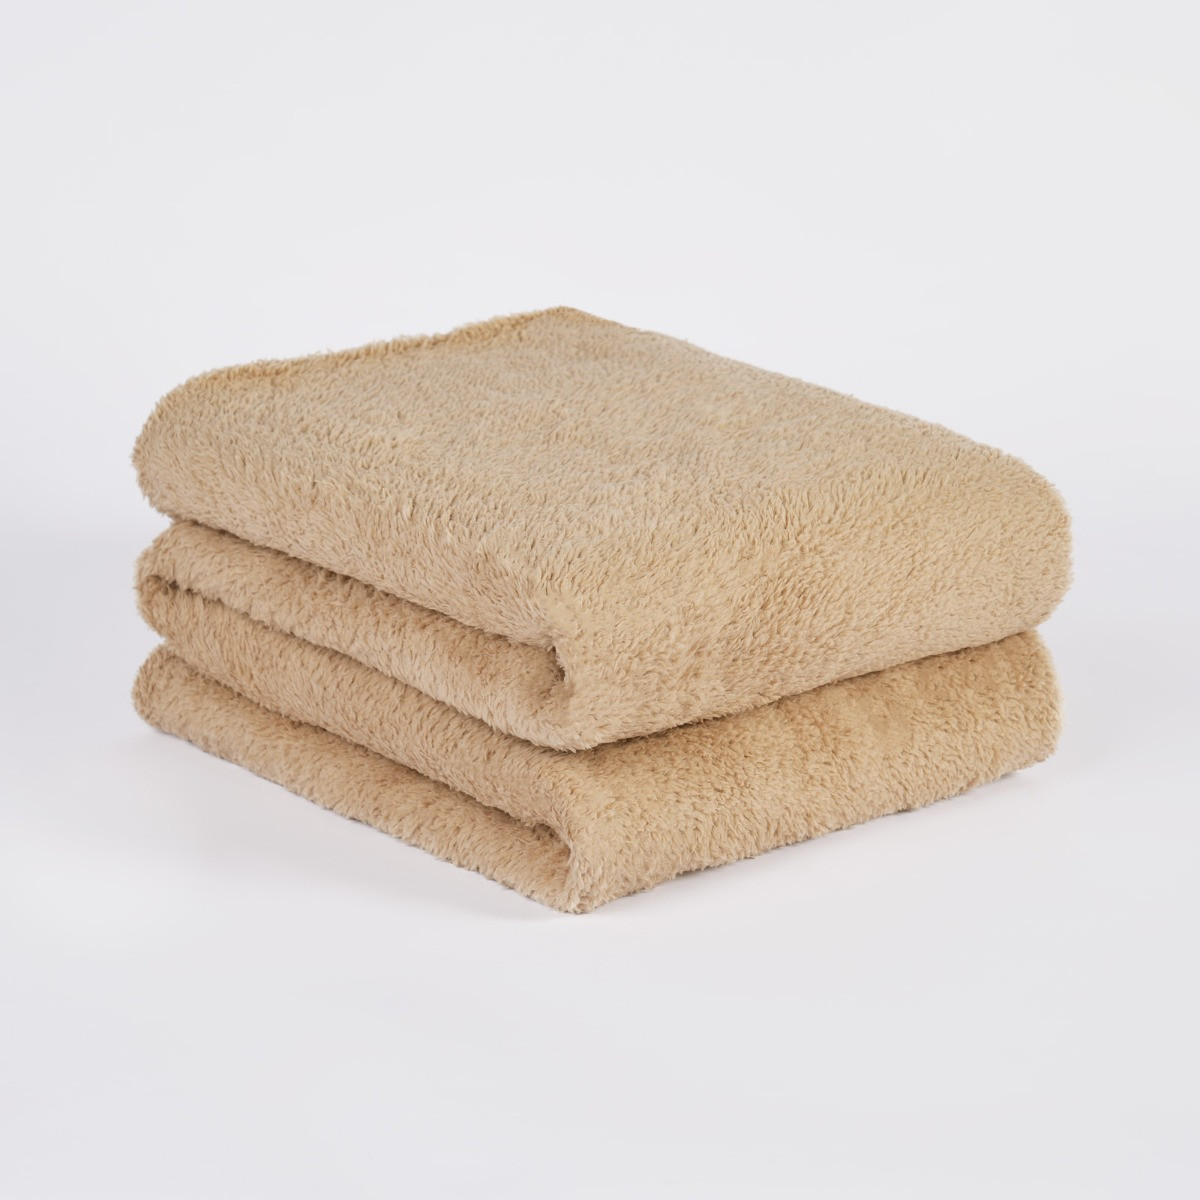 Brentfords Teddy Fleece Blanket Throw, Natural Latte Beige - 60 x 80 inches>